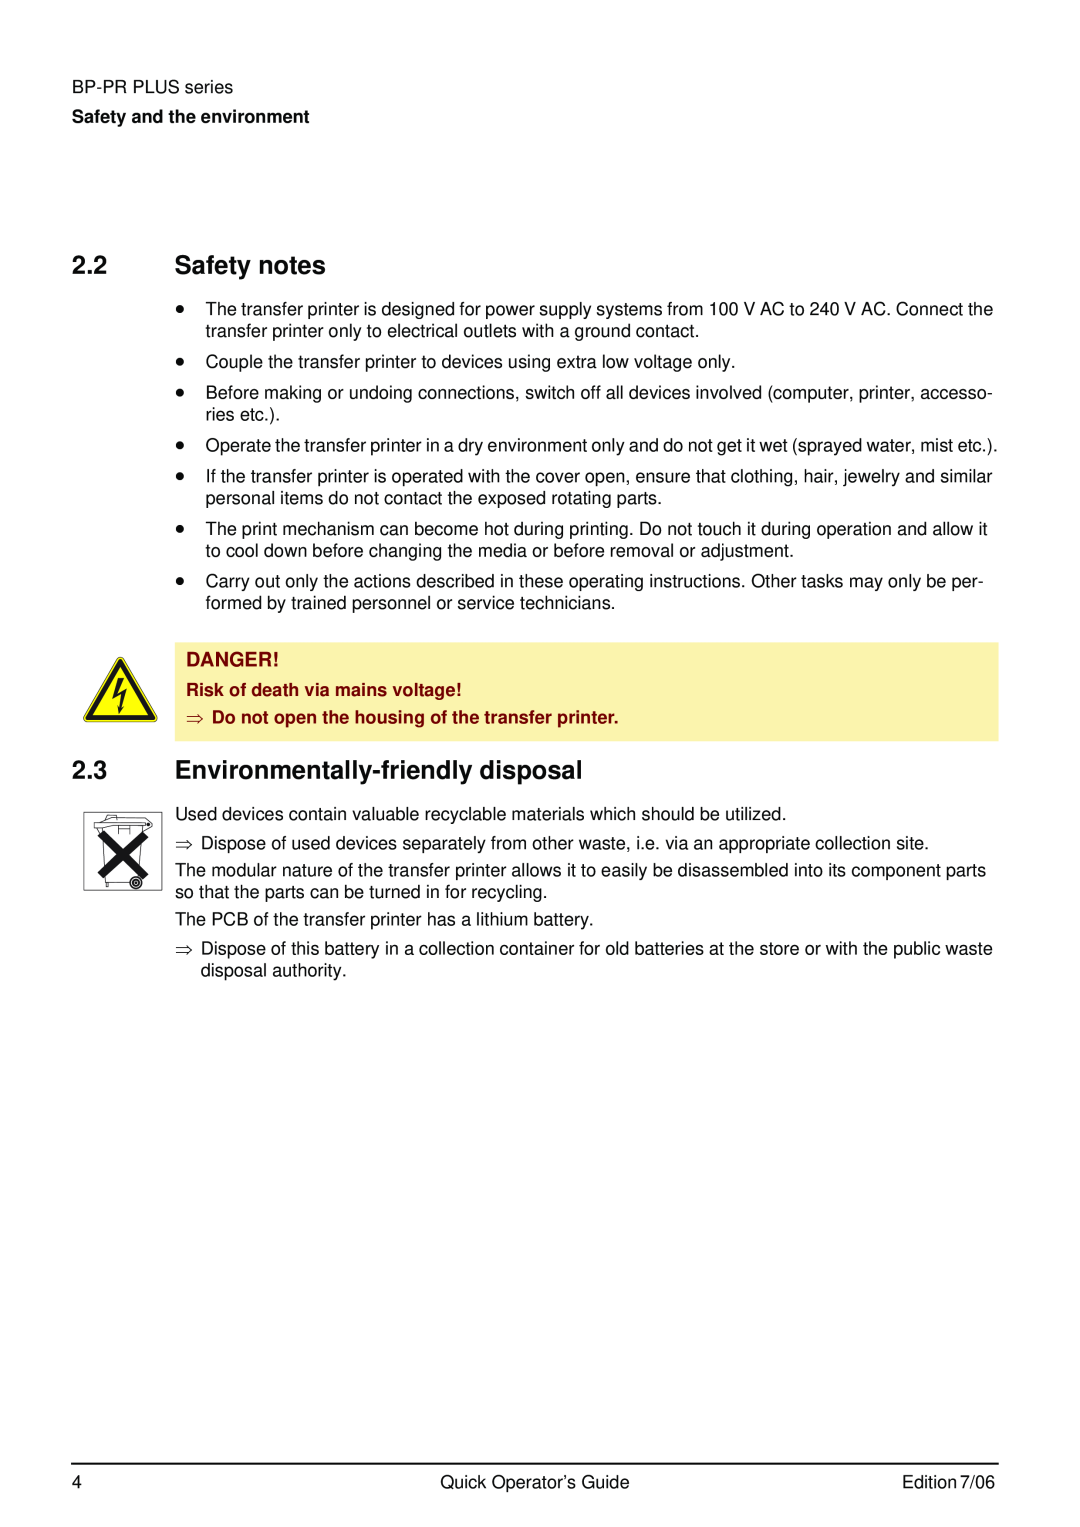 Brady BP-PR PLUS Series manual Safety notes, Environmentally-friendly disposal, Danger, Risk of death via mains voltage 